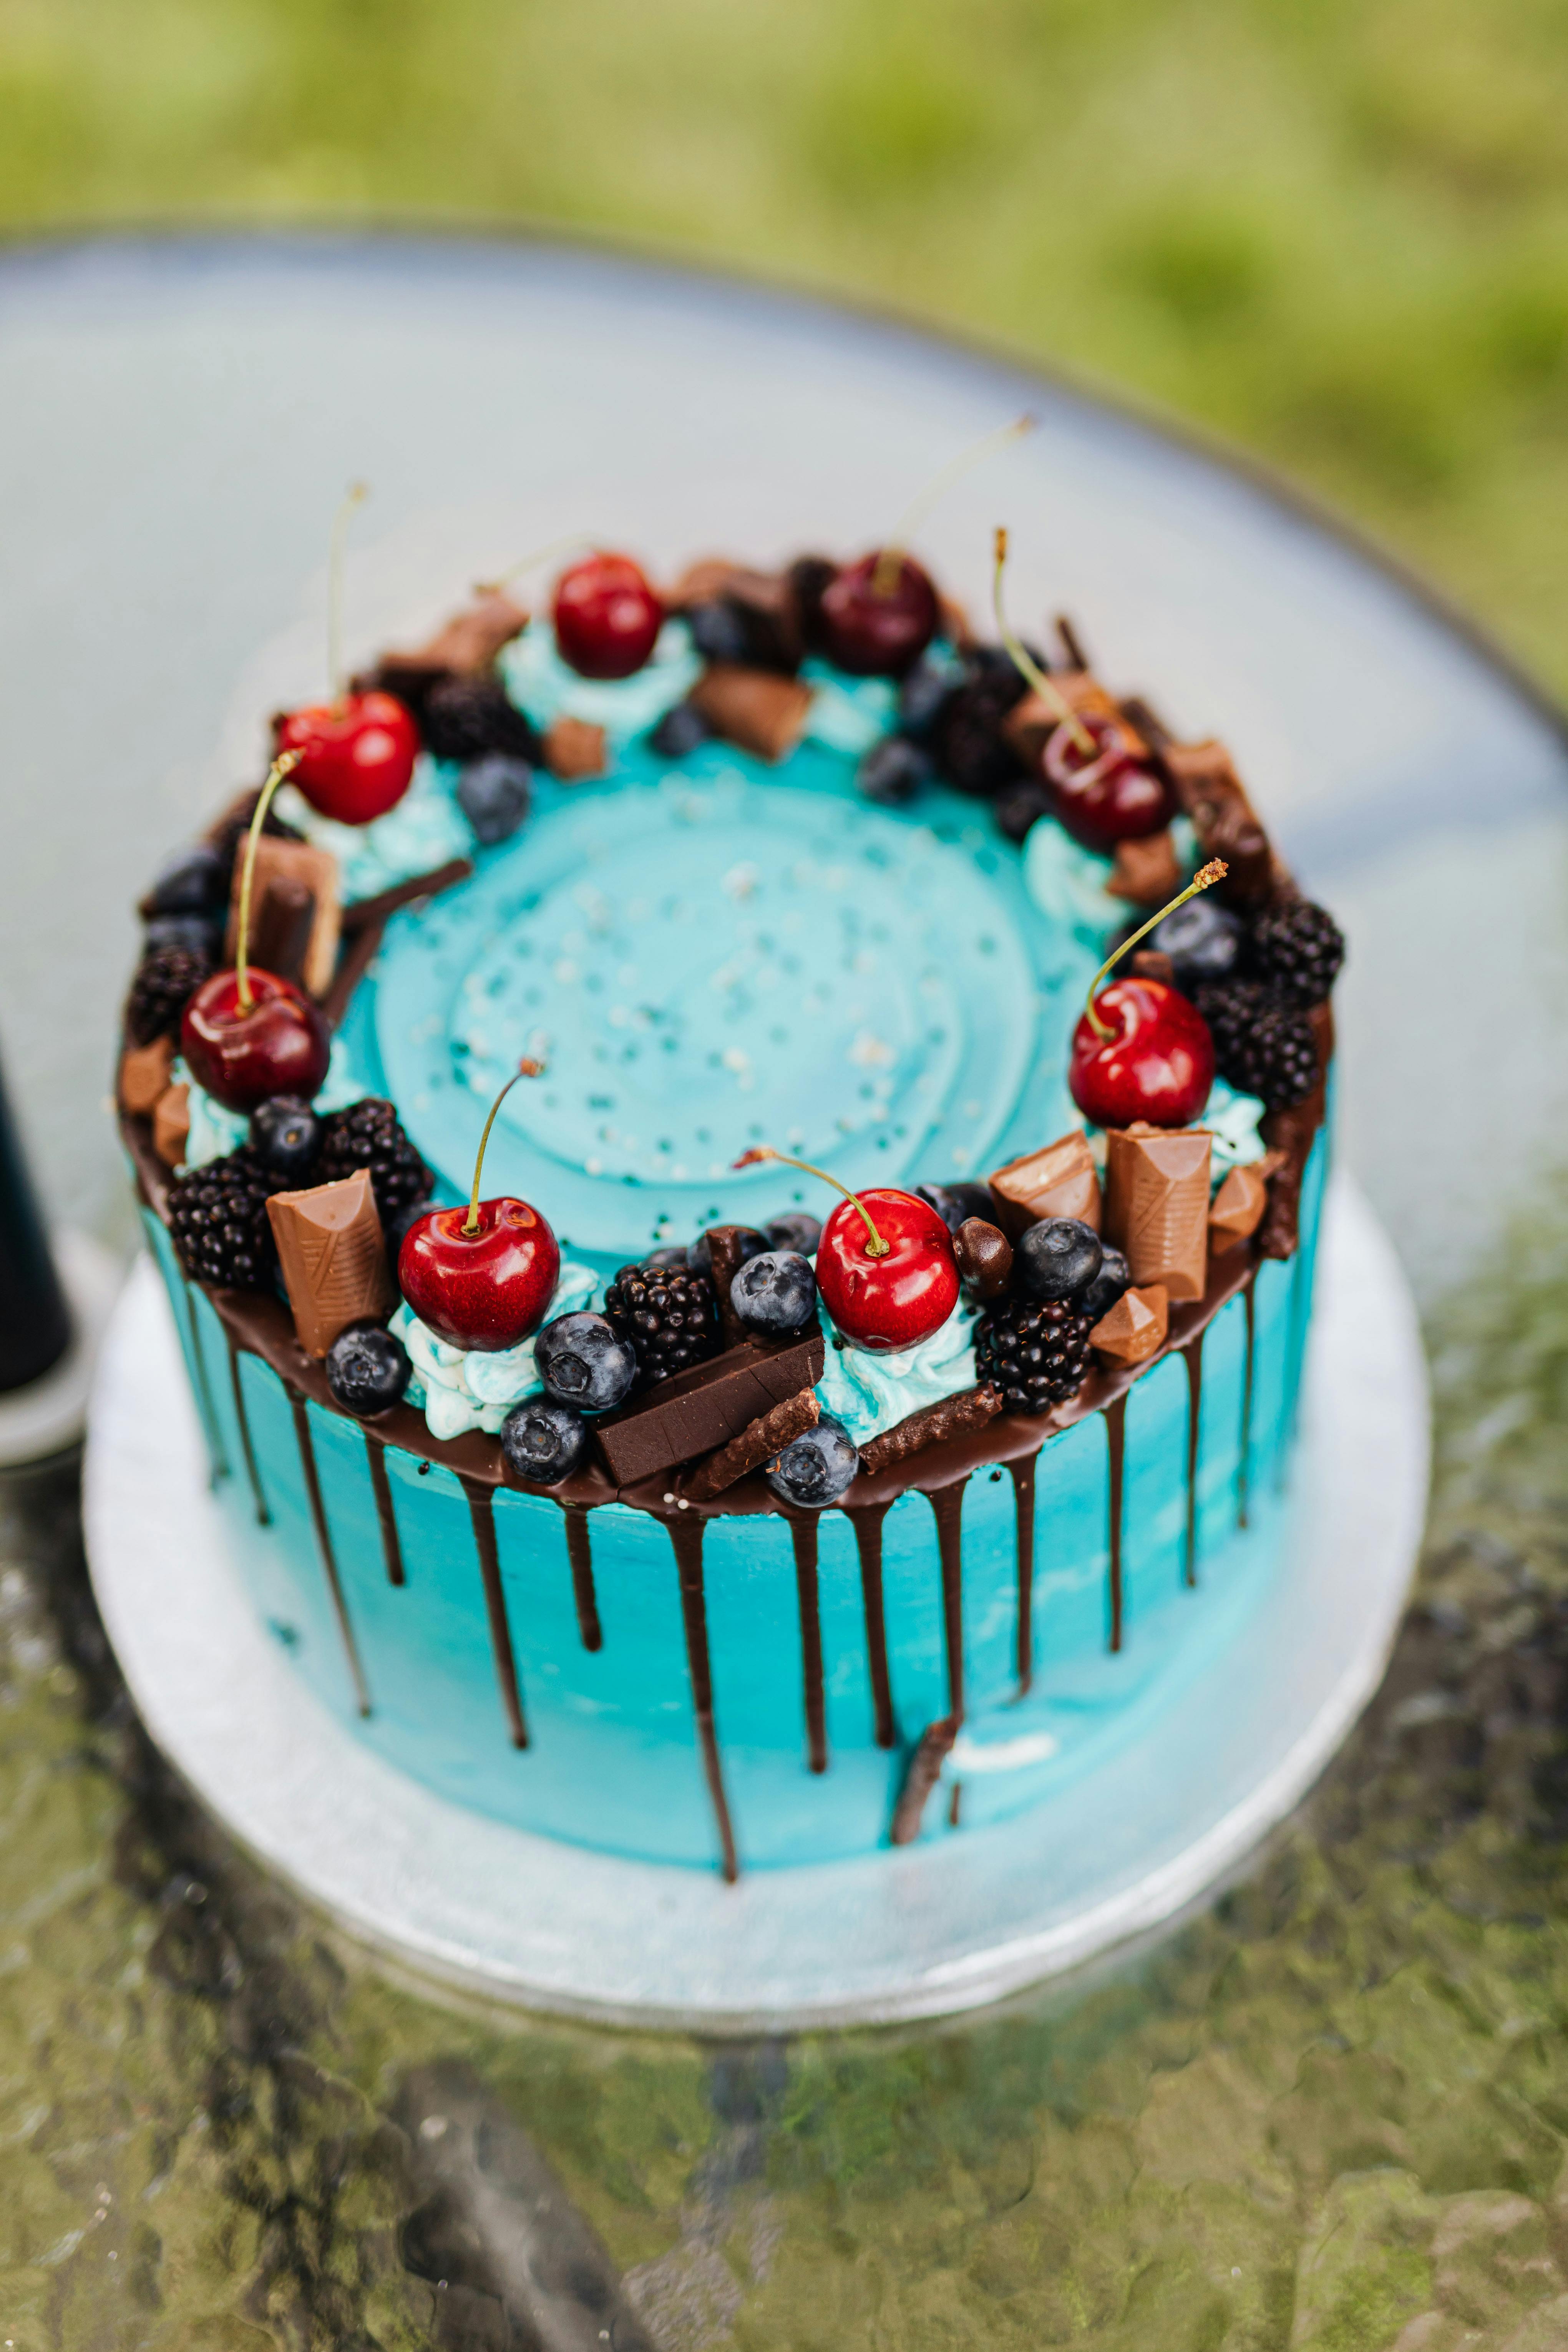 Cool cake Recipe by Mohana Lakshmi - Cookpad